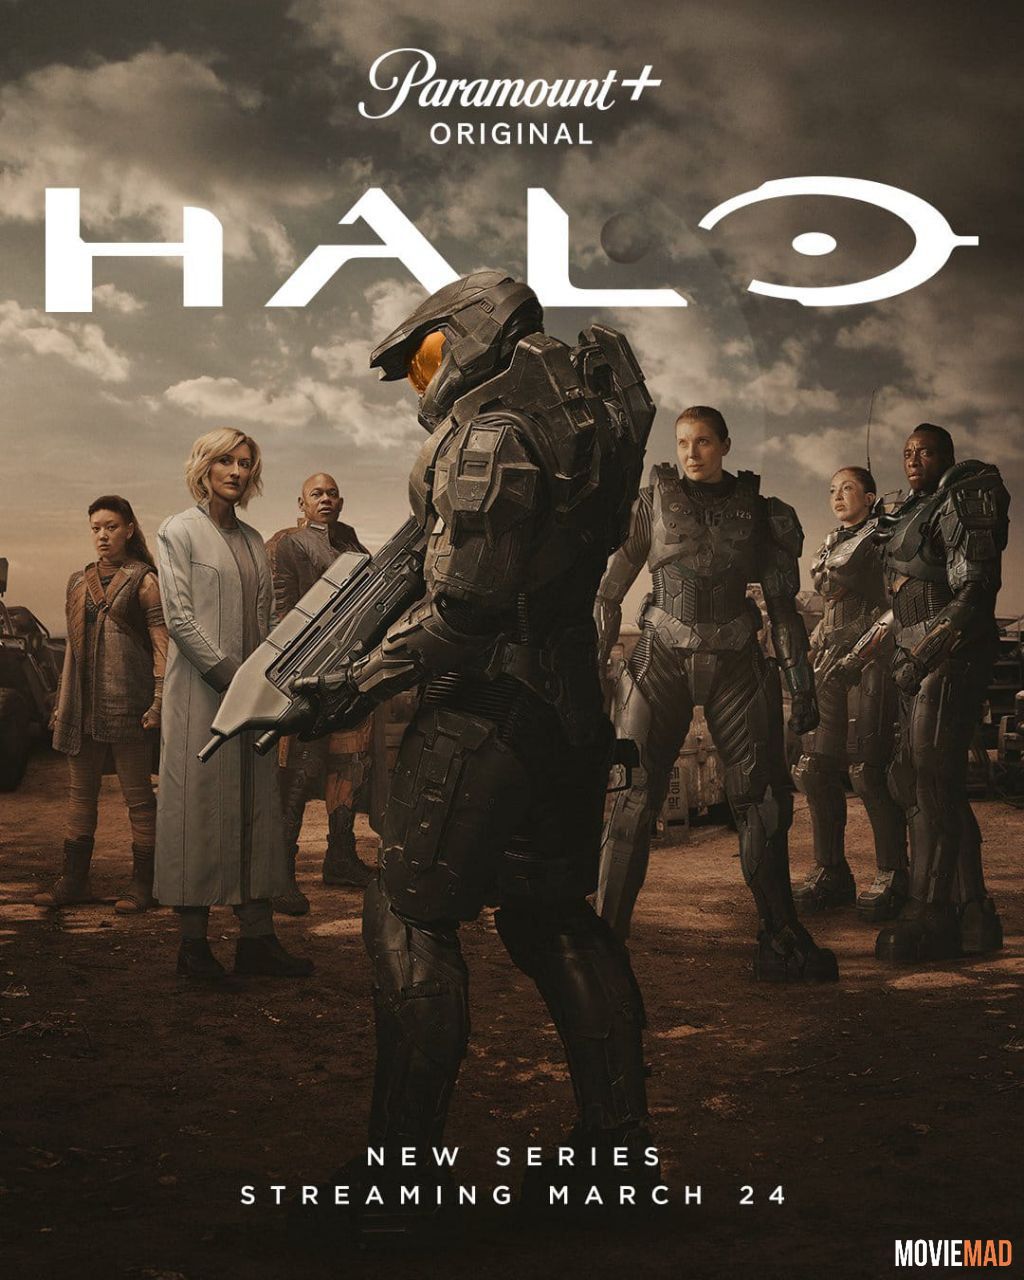 Halo S01E06 (2022) Hindi Dubbed ORG Paramount Original WEB Series HDRip 720p 480p